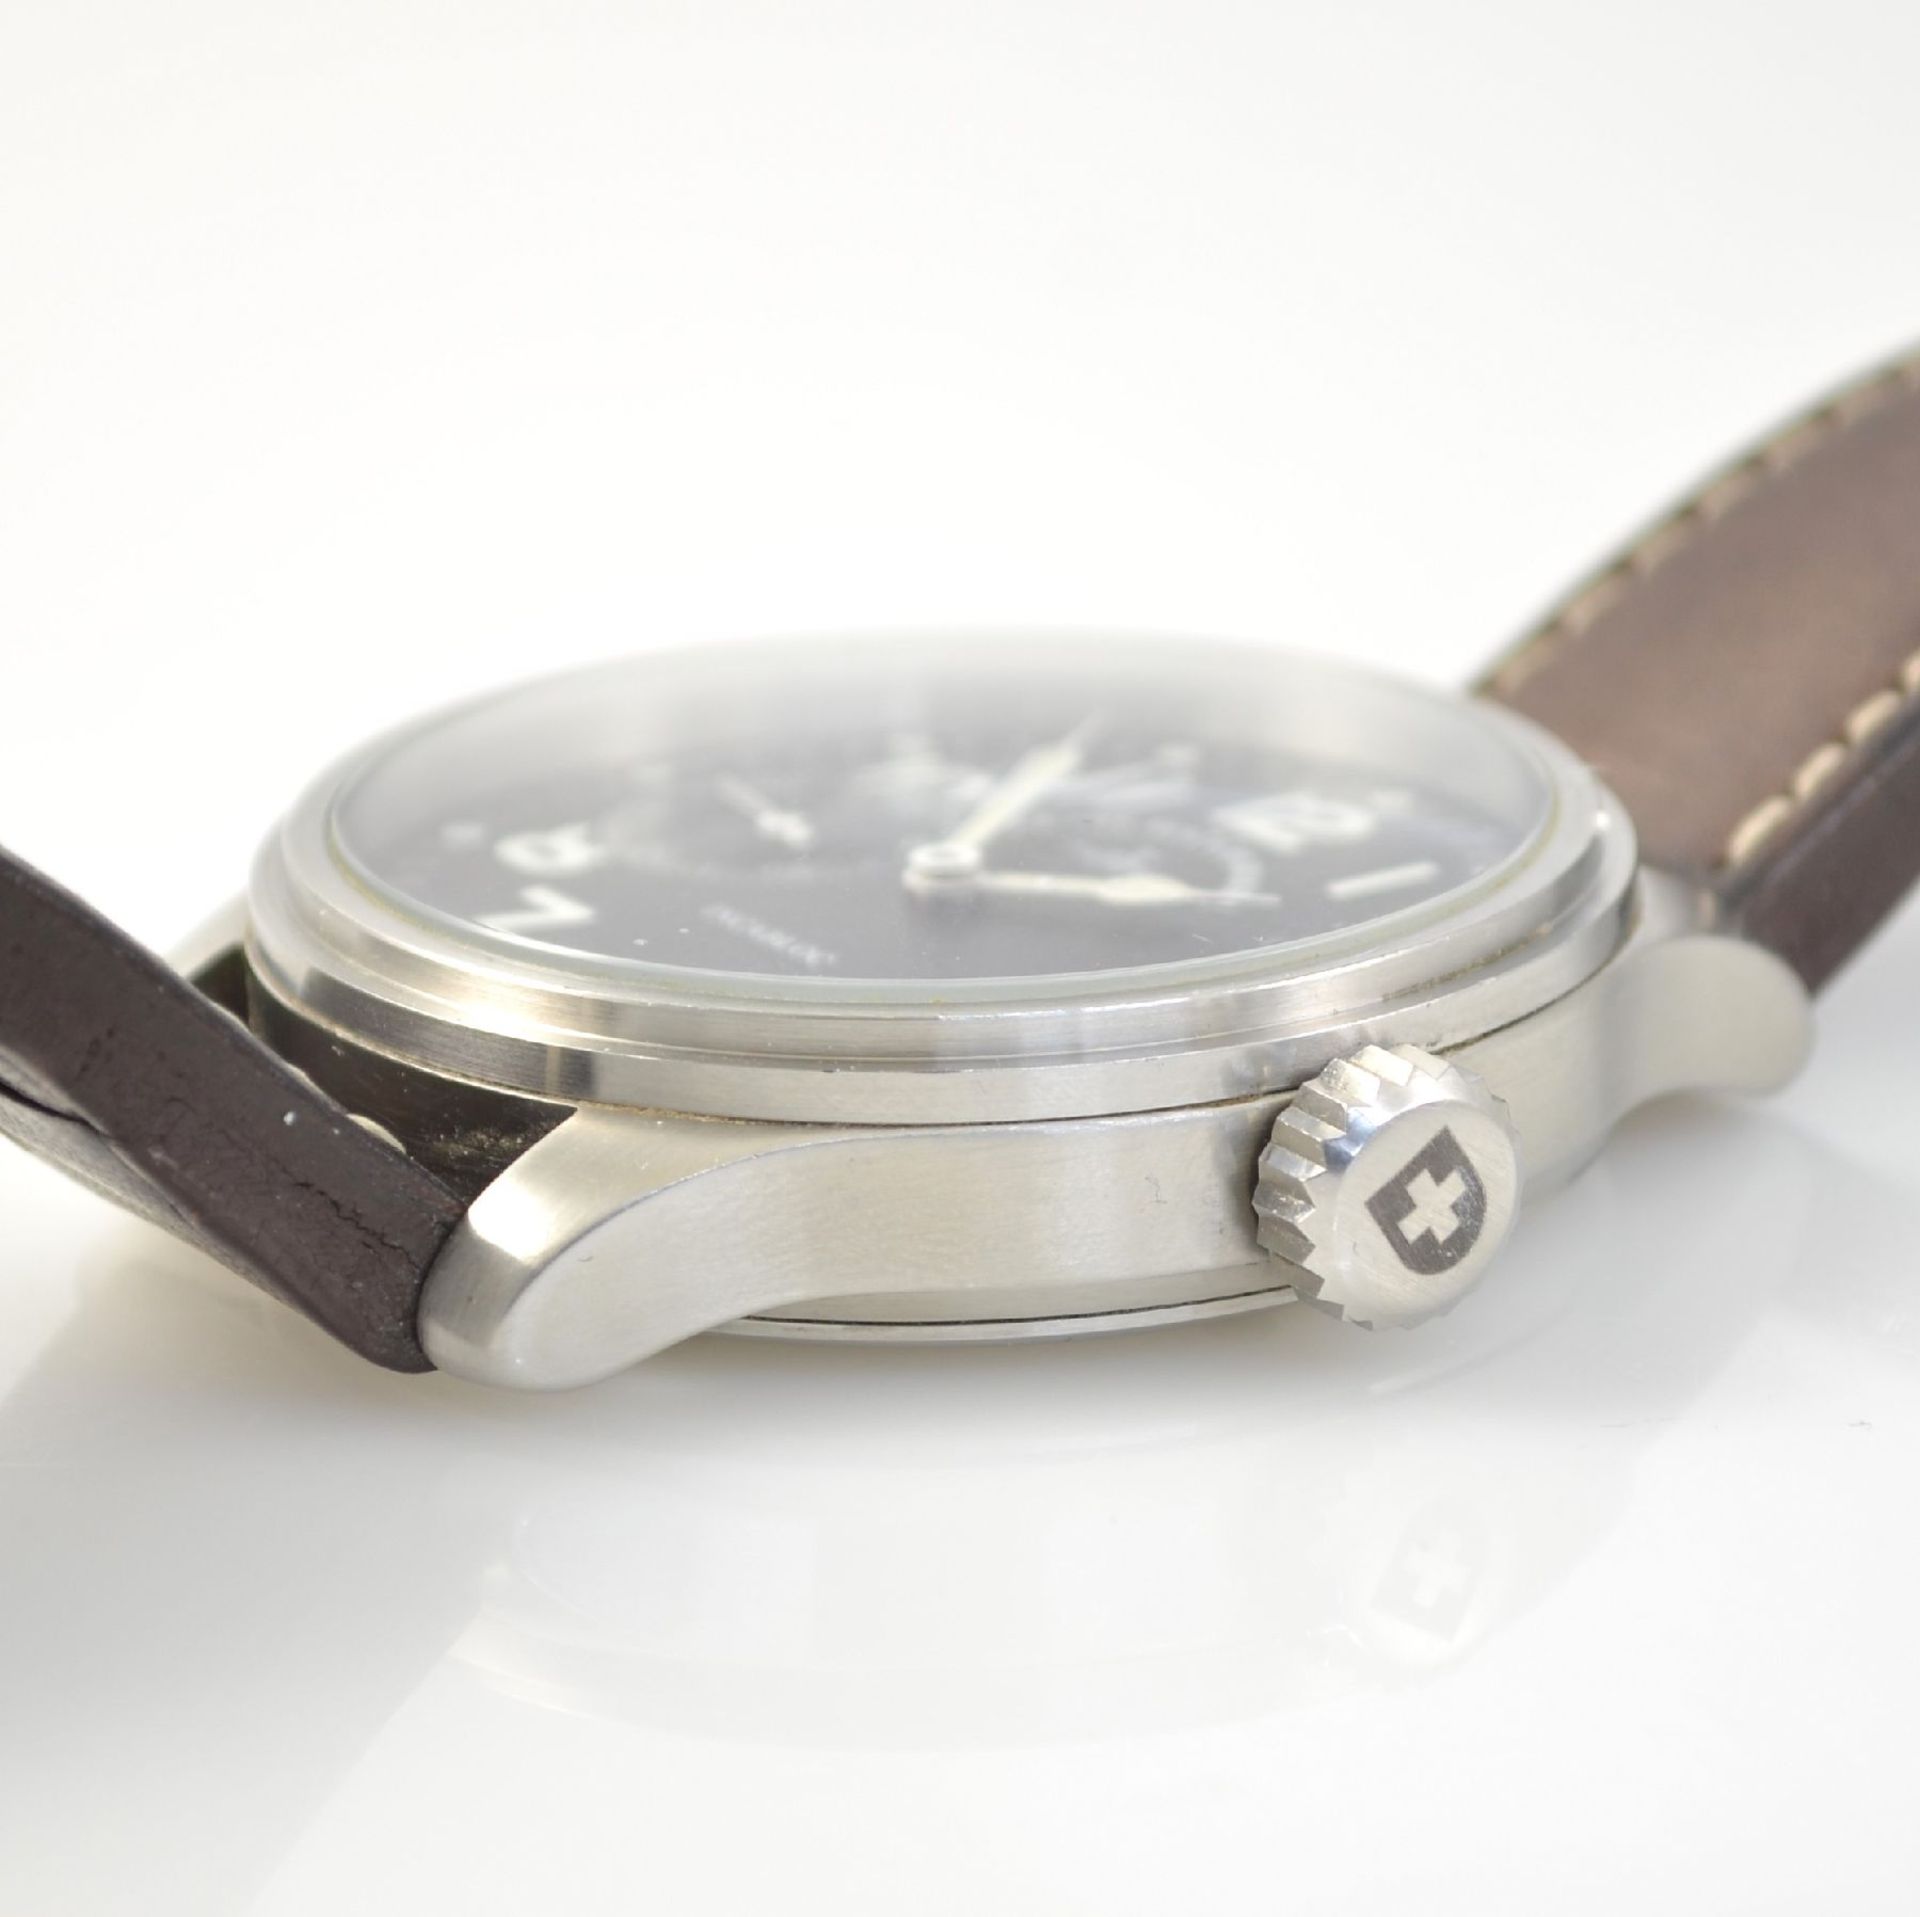 ZENO-WATCH BASEL Pilot big gents wristwatch, Switzerland sold in May 2006 according to warranty - Bild 5 aus 7